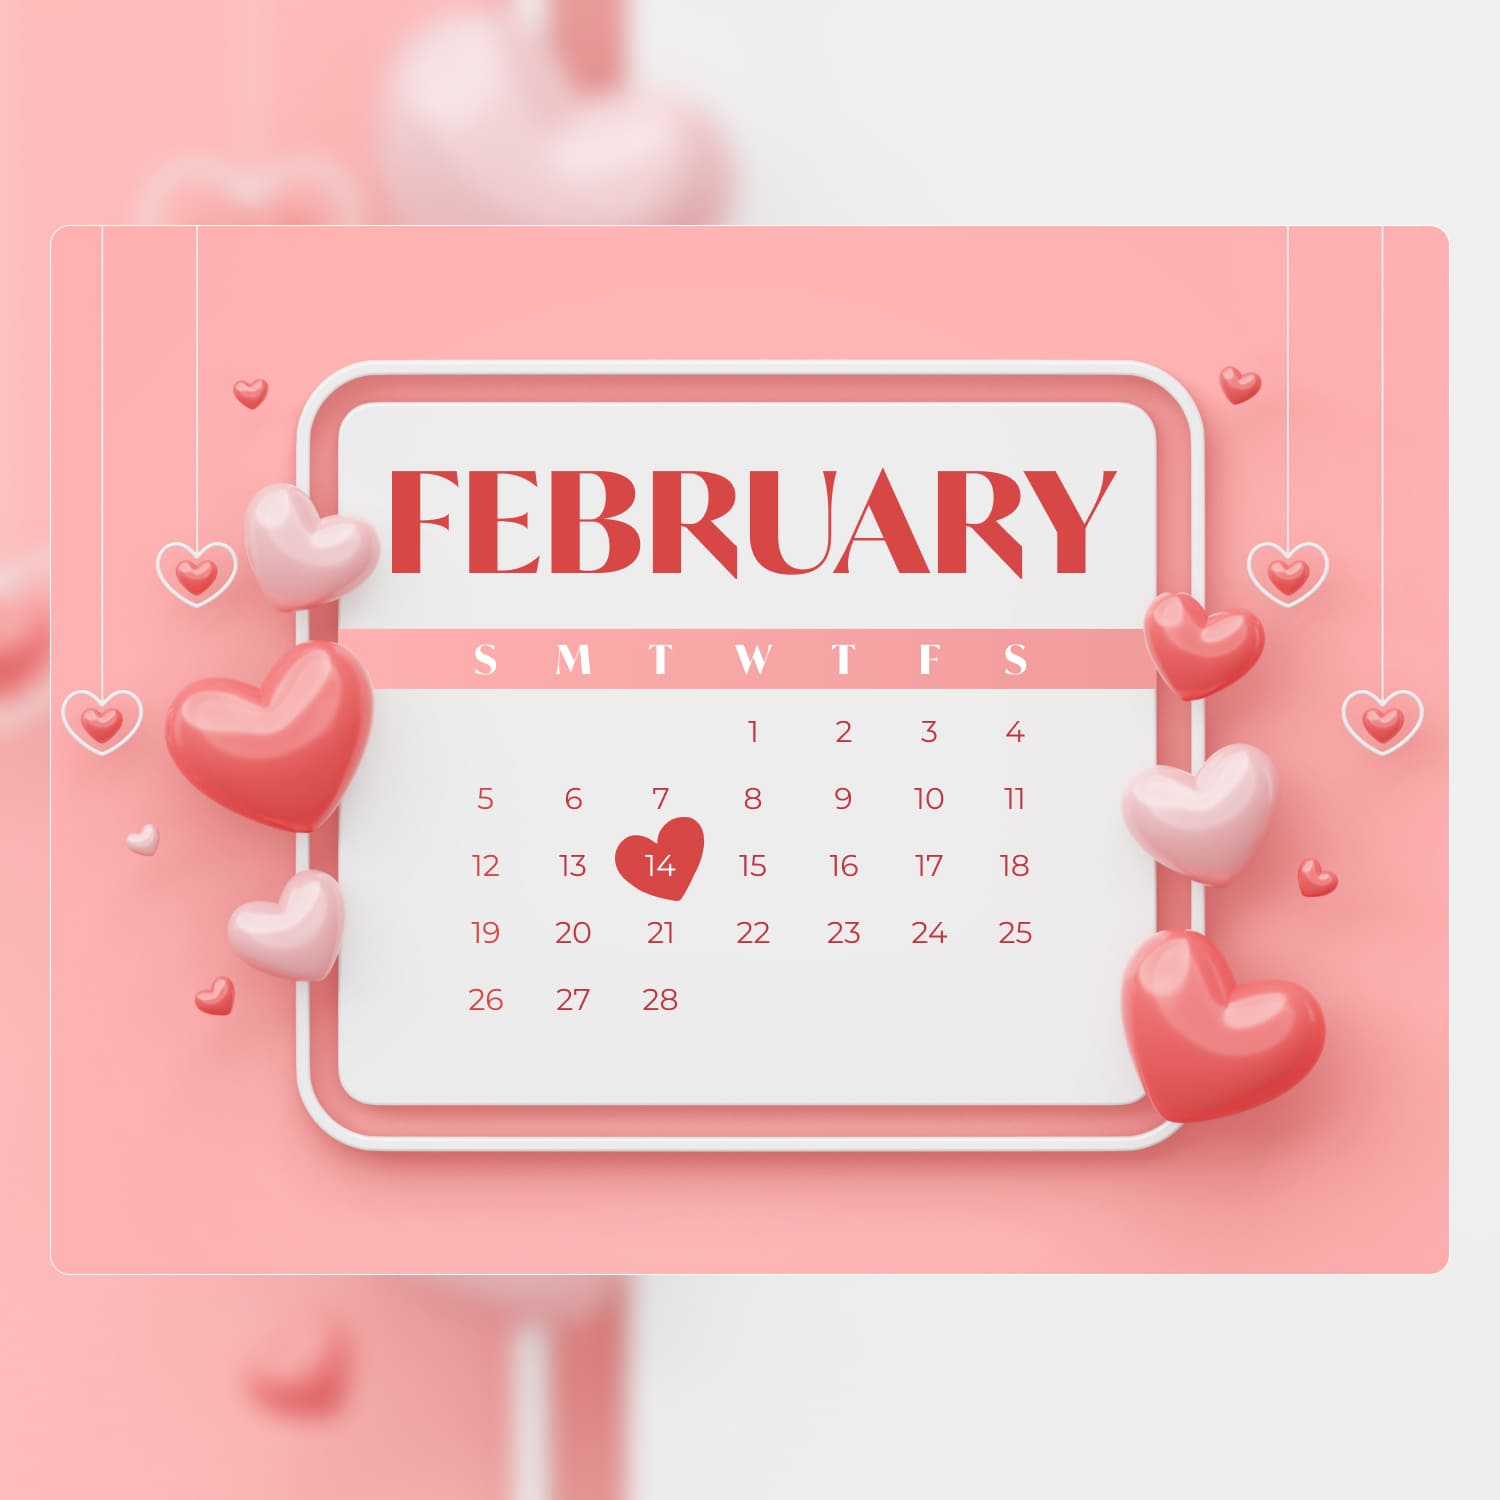 February Calendar Wallpaper, second picture 1500*1500.